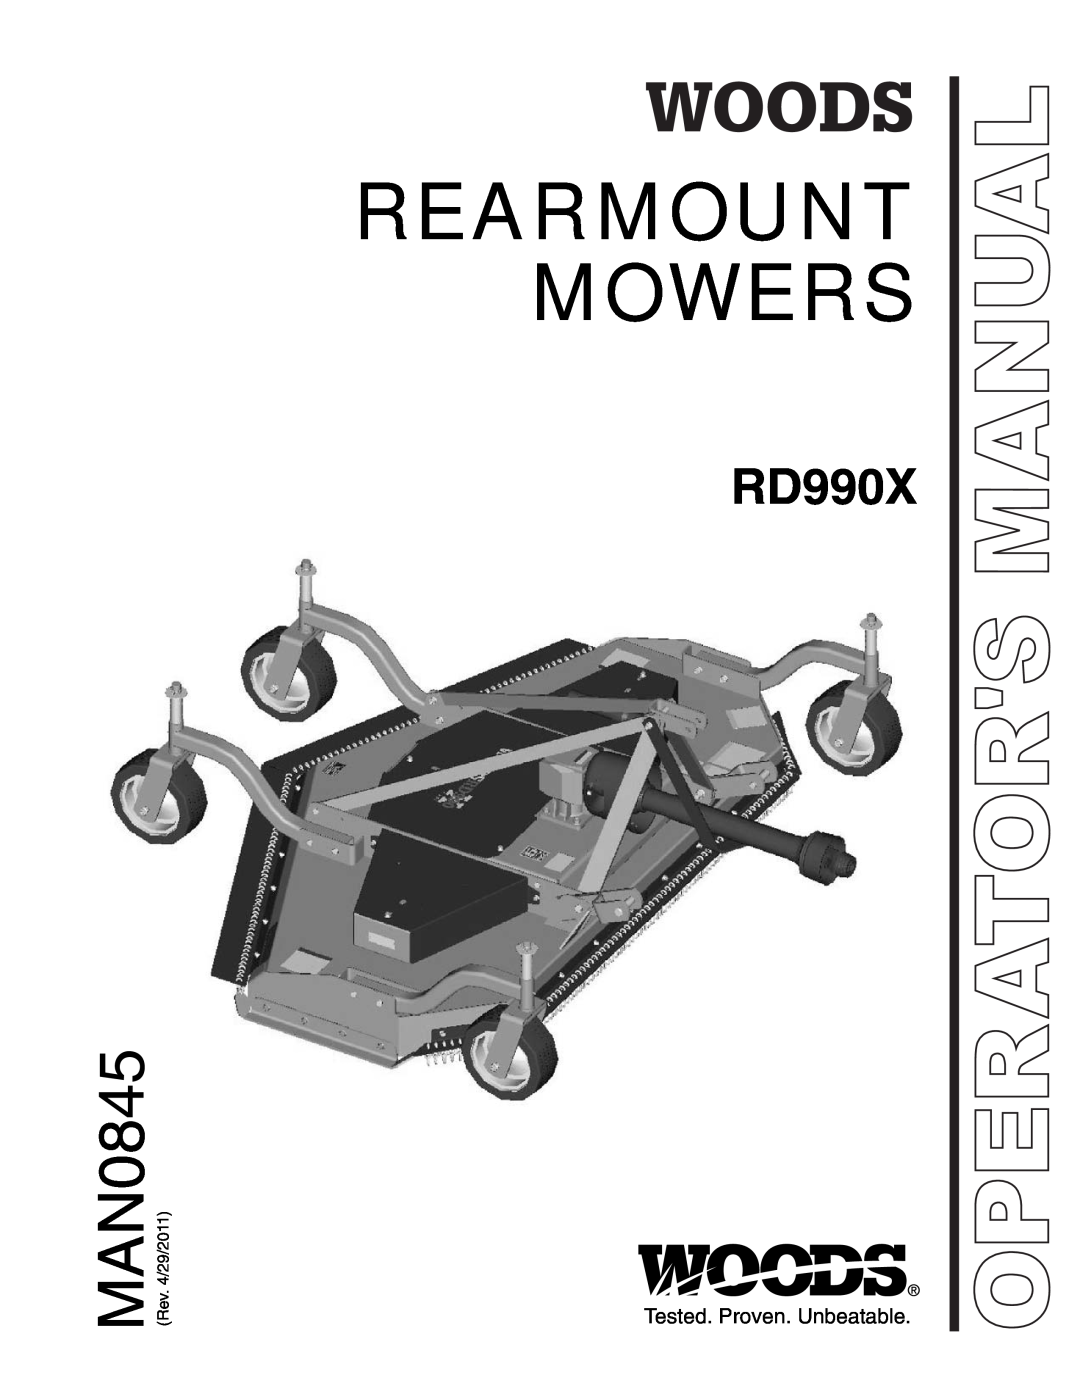 Woods Equipment RD990X manual Tested. Proven. Unbeatable, Rearmount Mowers, MAN0845, Operators Manual 